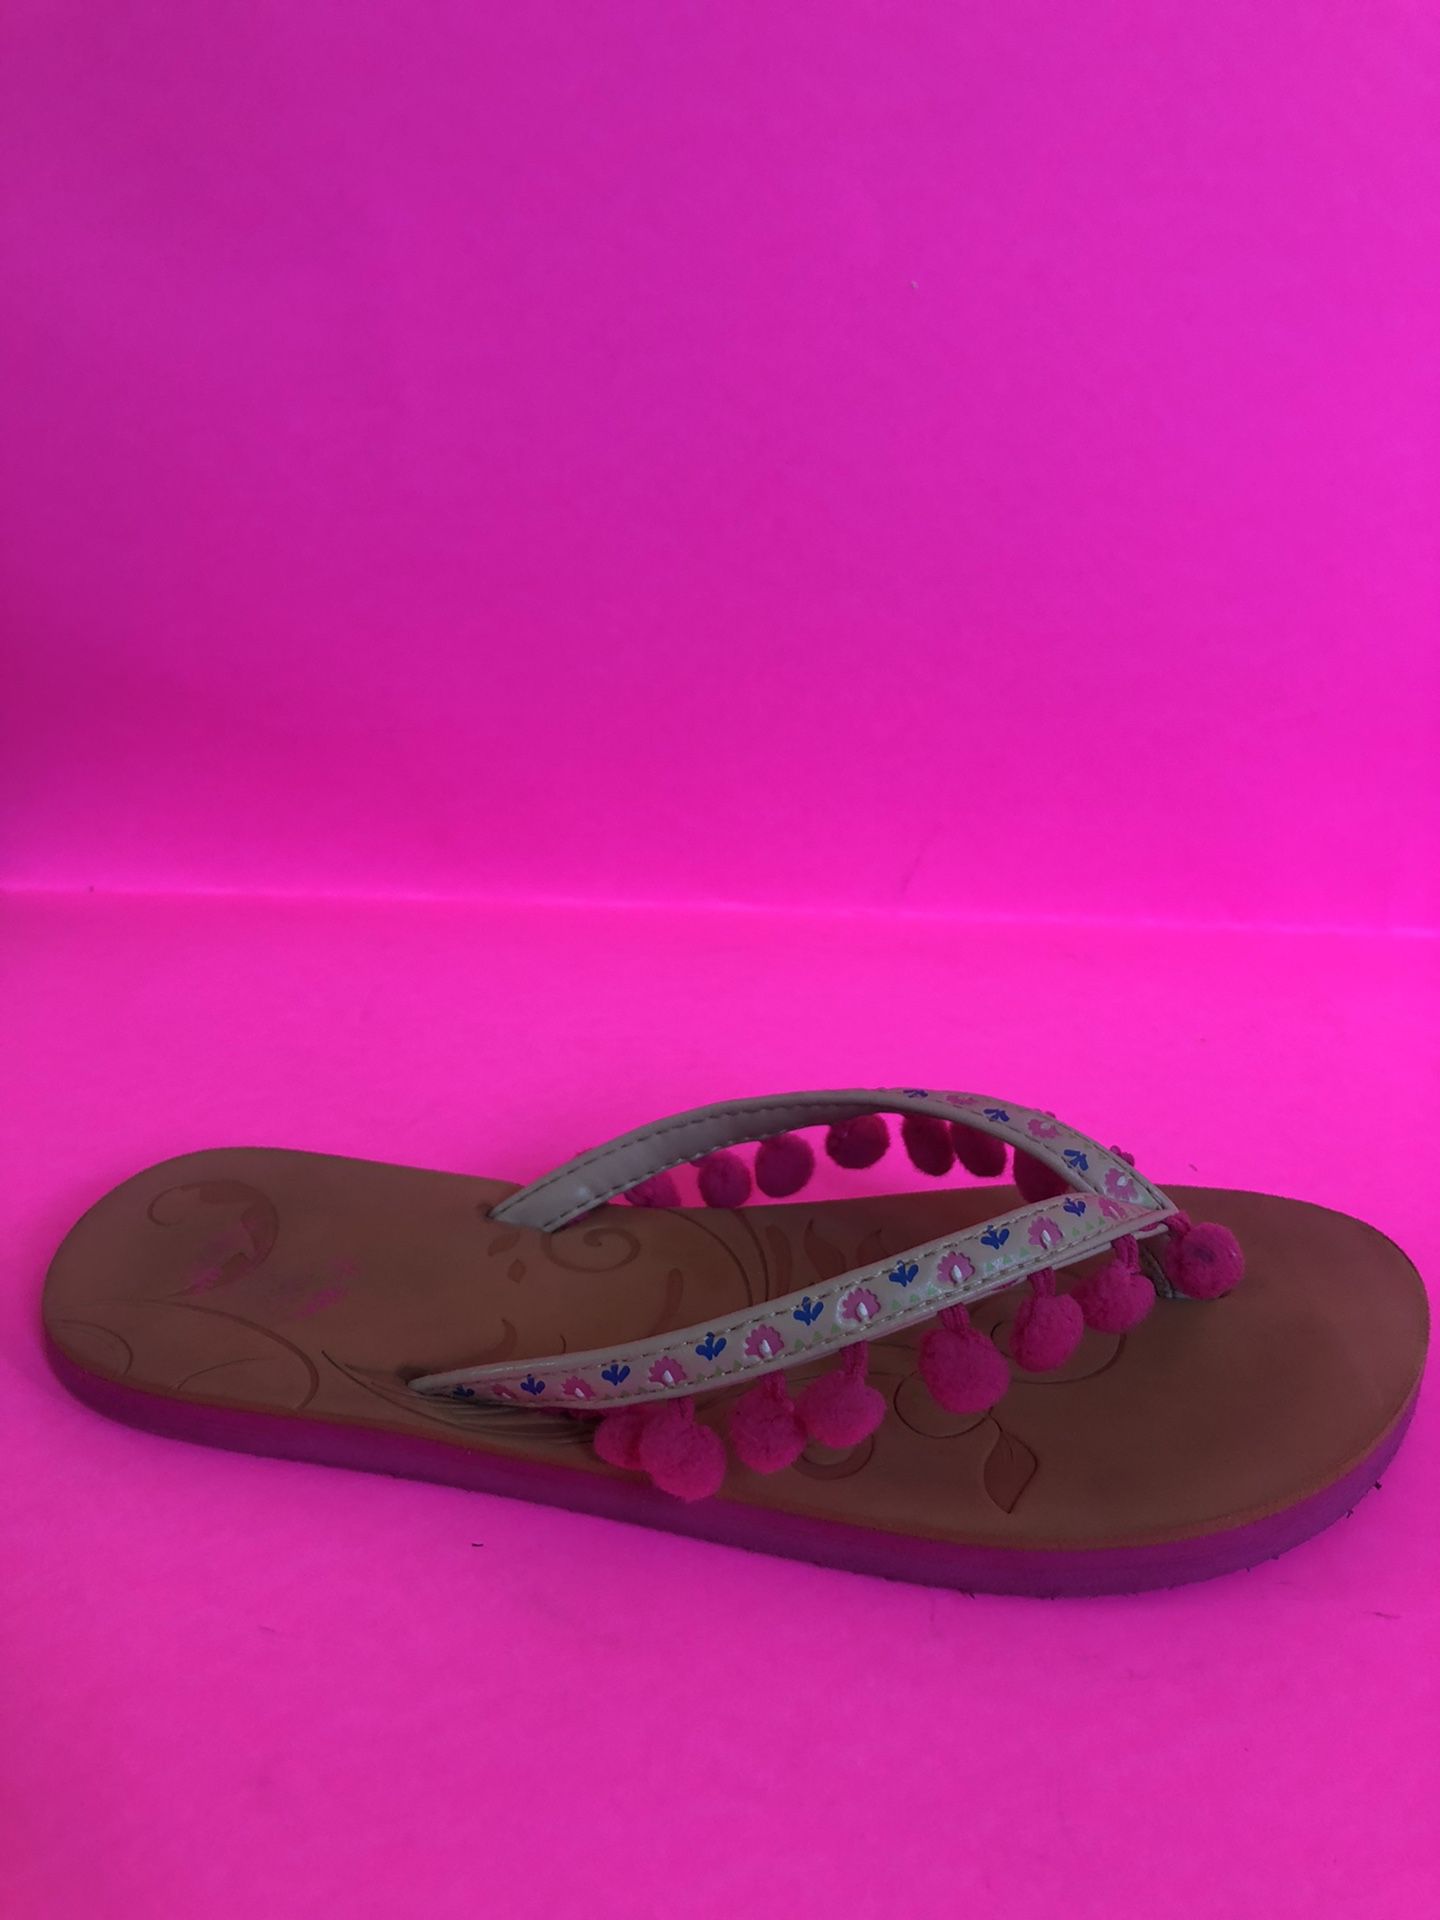 Sandals / Flip flops - with hot pink/blue detail -size 5